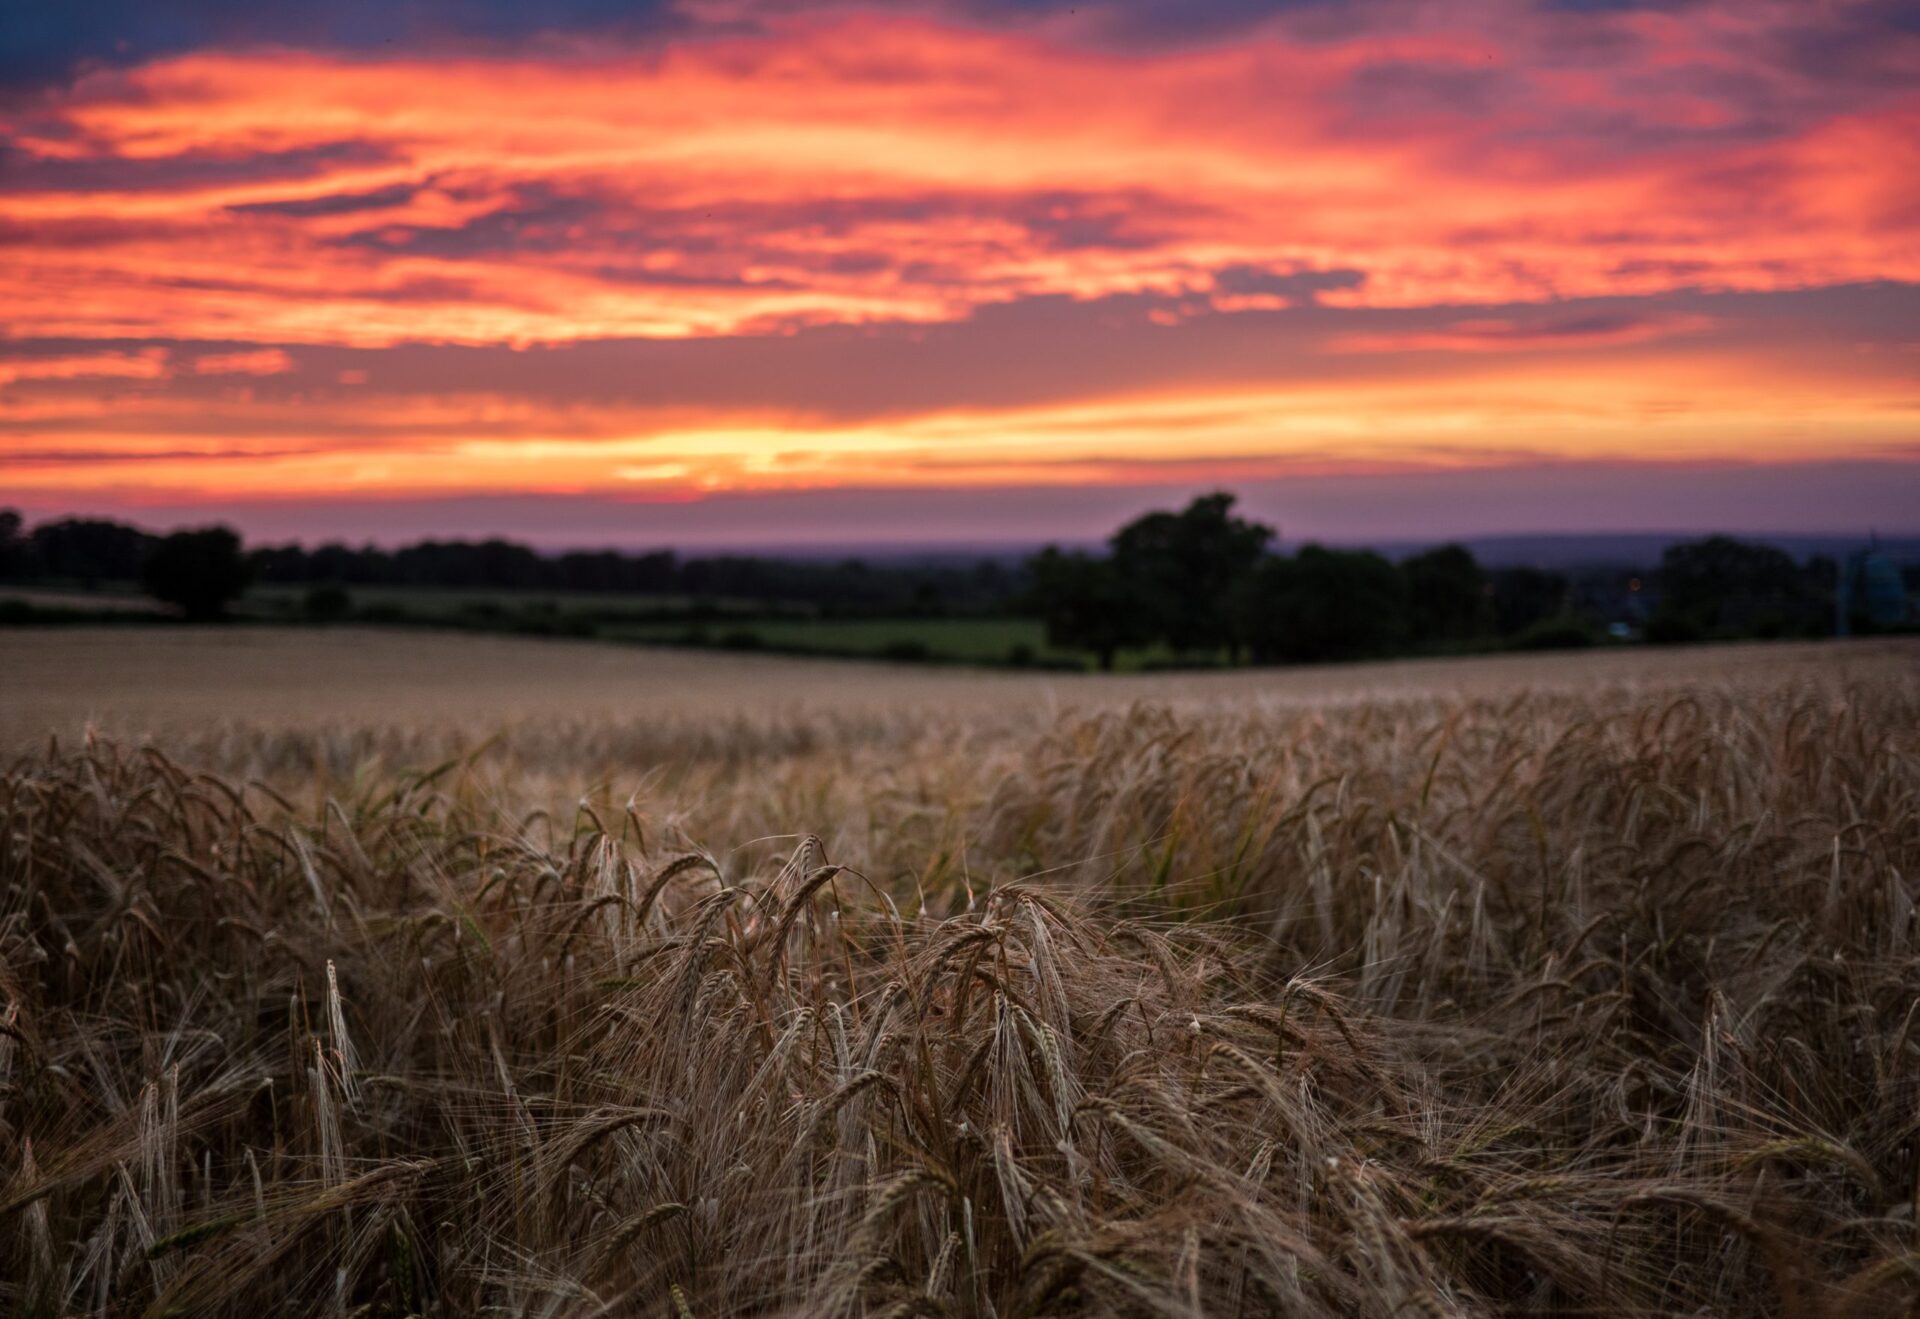 crop at sunset